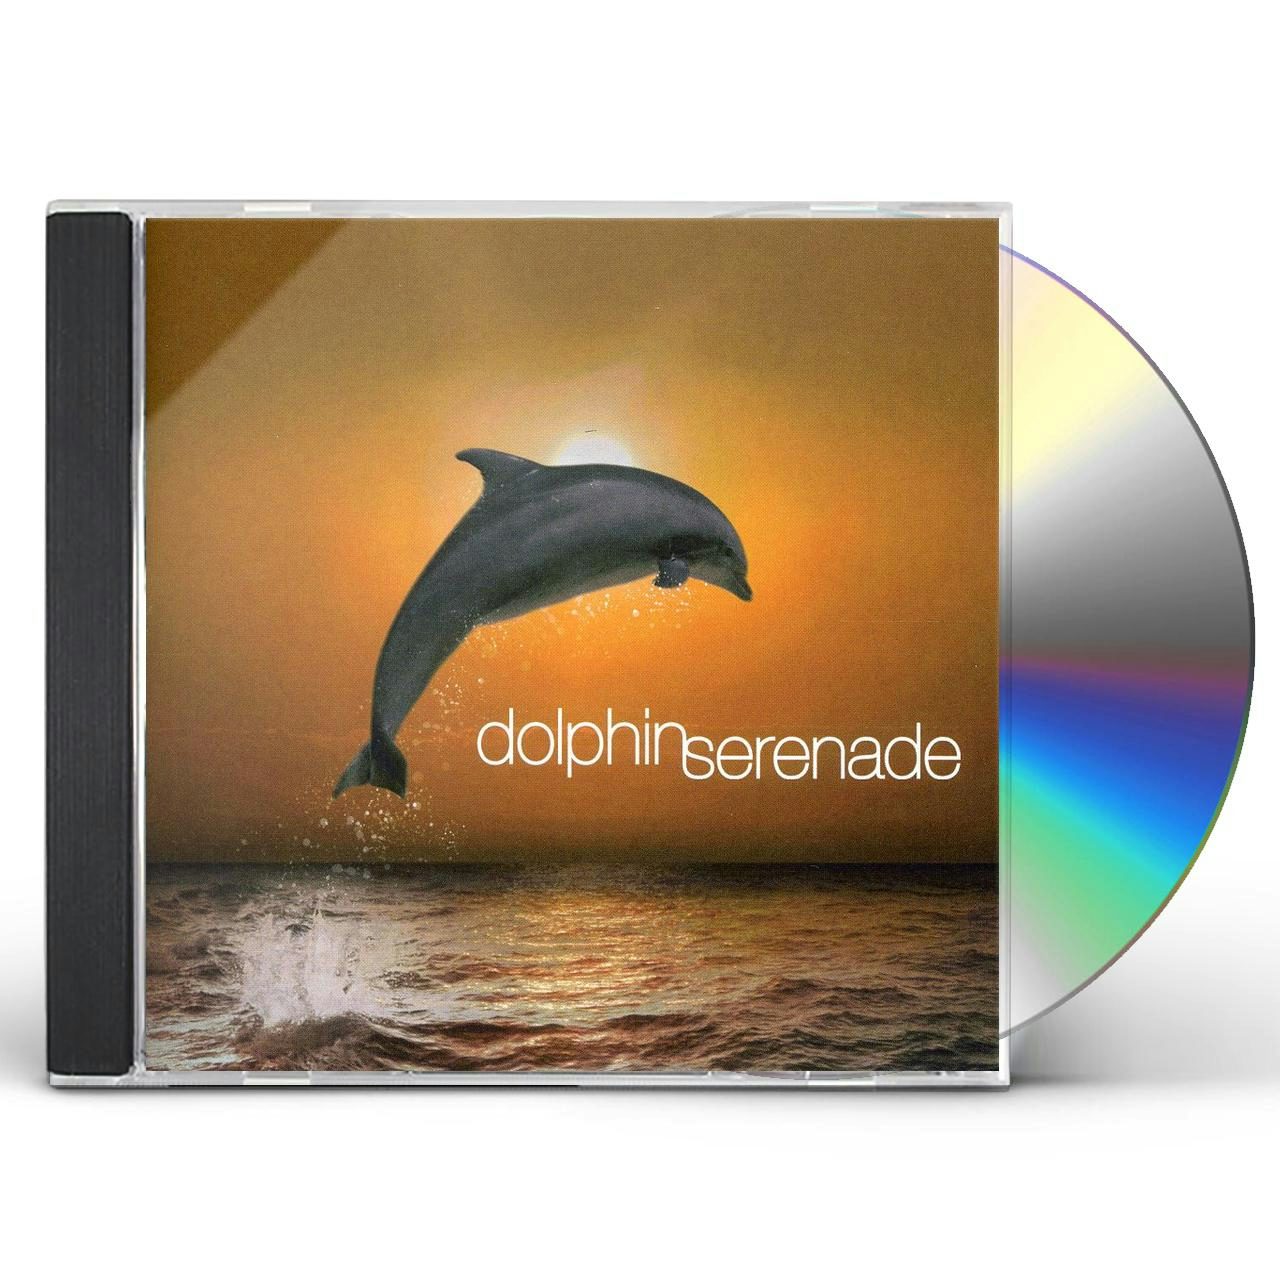 Global Journey DOLPHIN SERENADE CD